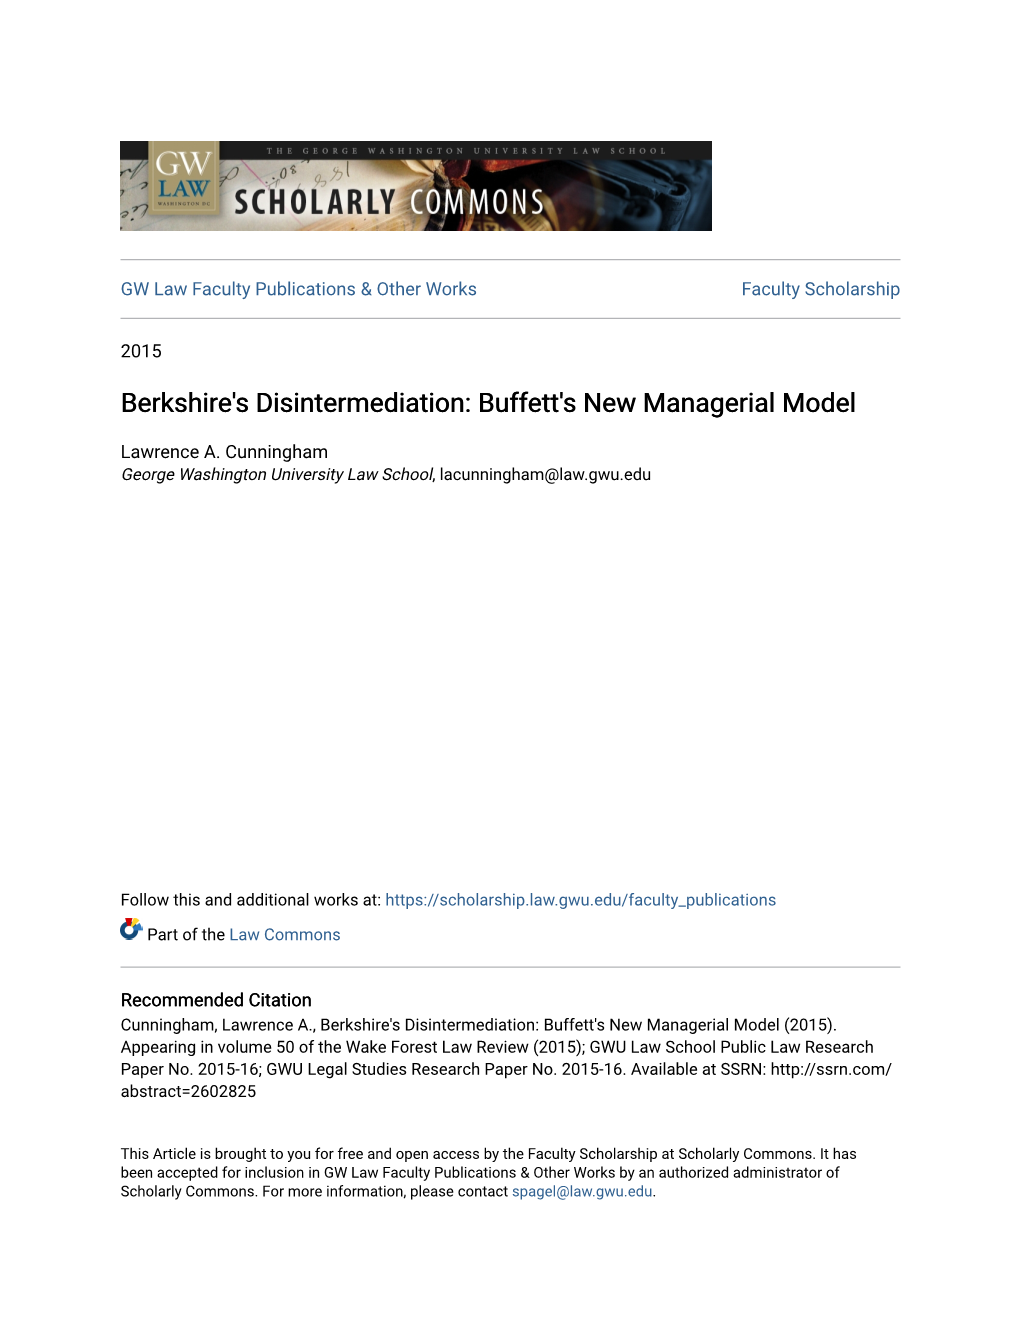 Berkshire's Disintermediation: Buffett's New Managerial Model